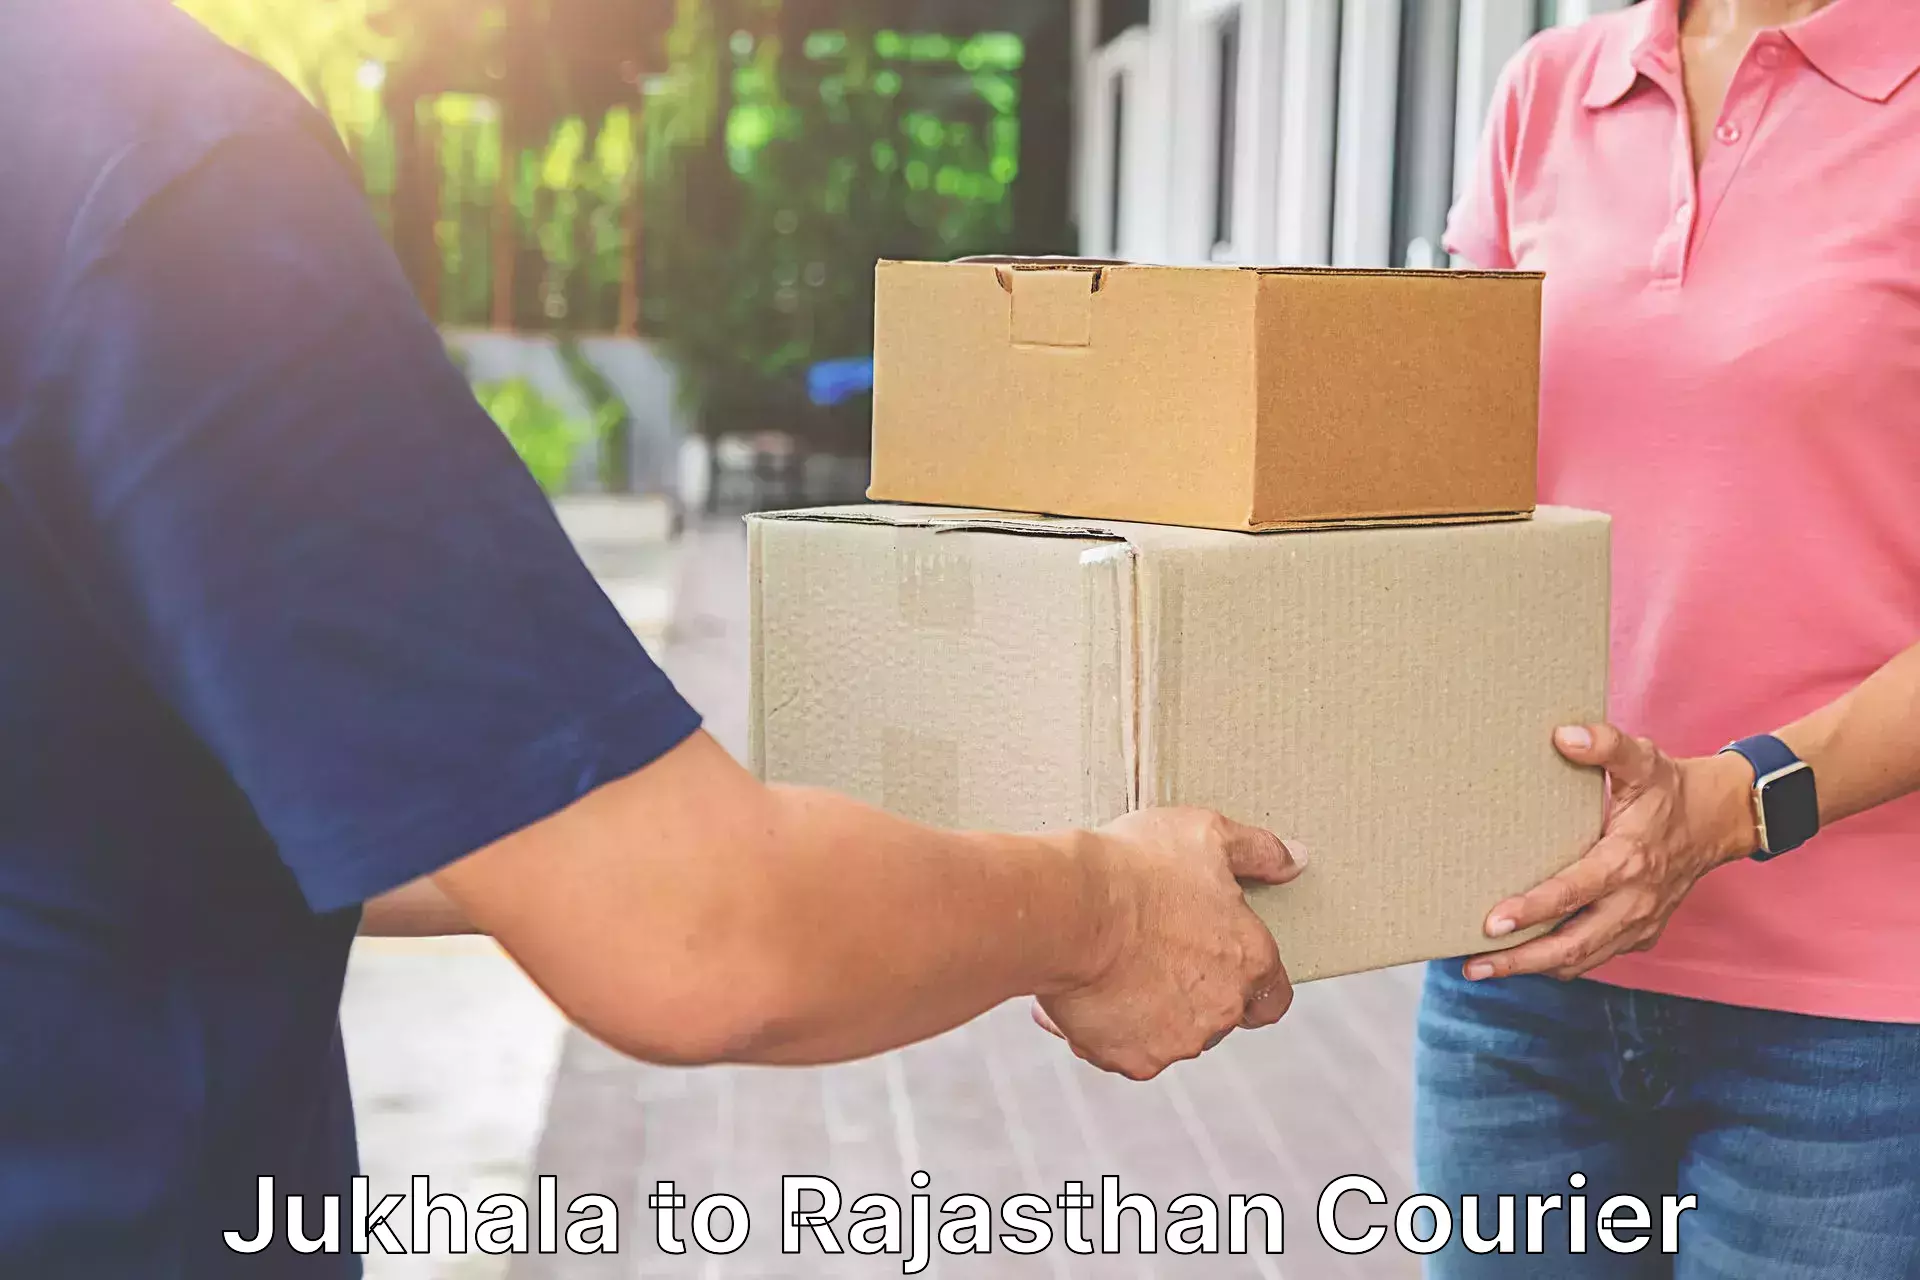 Global shipping networks Jukhala to Bikaner